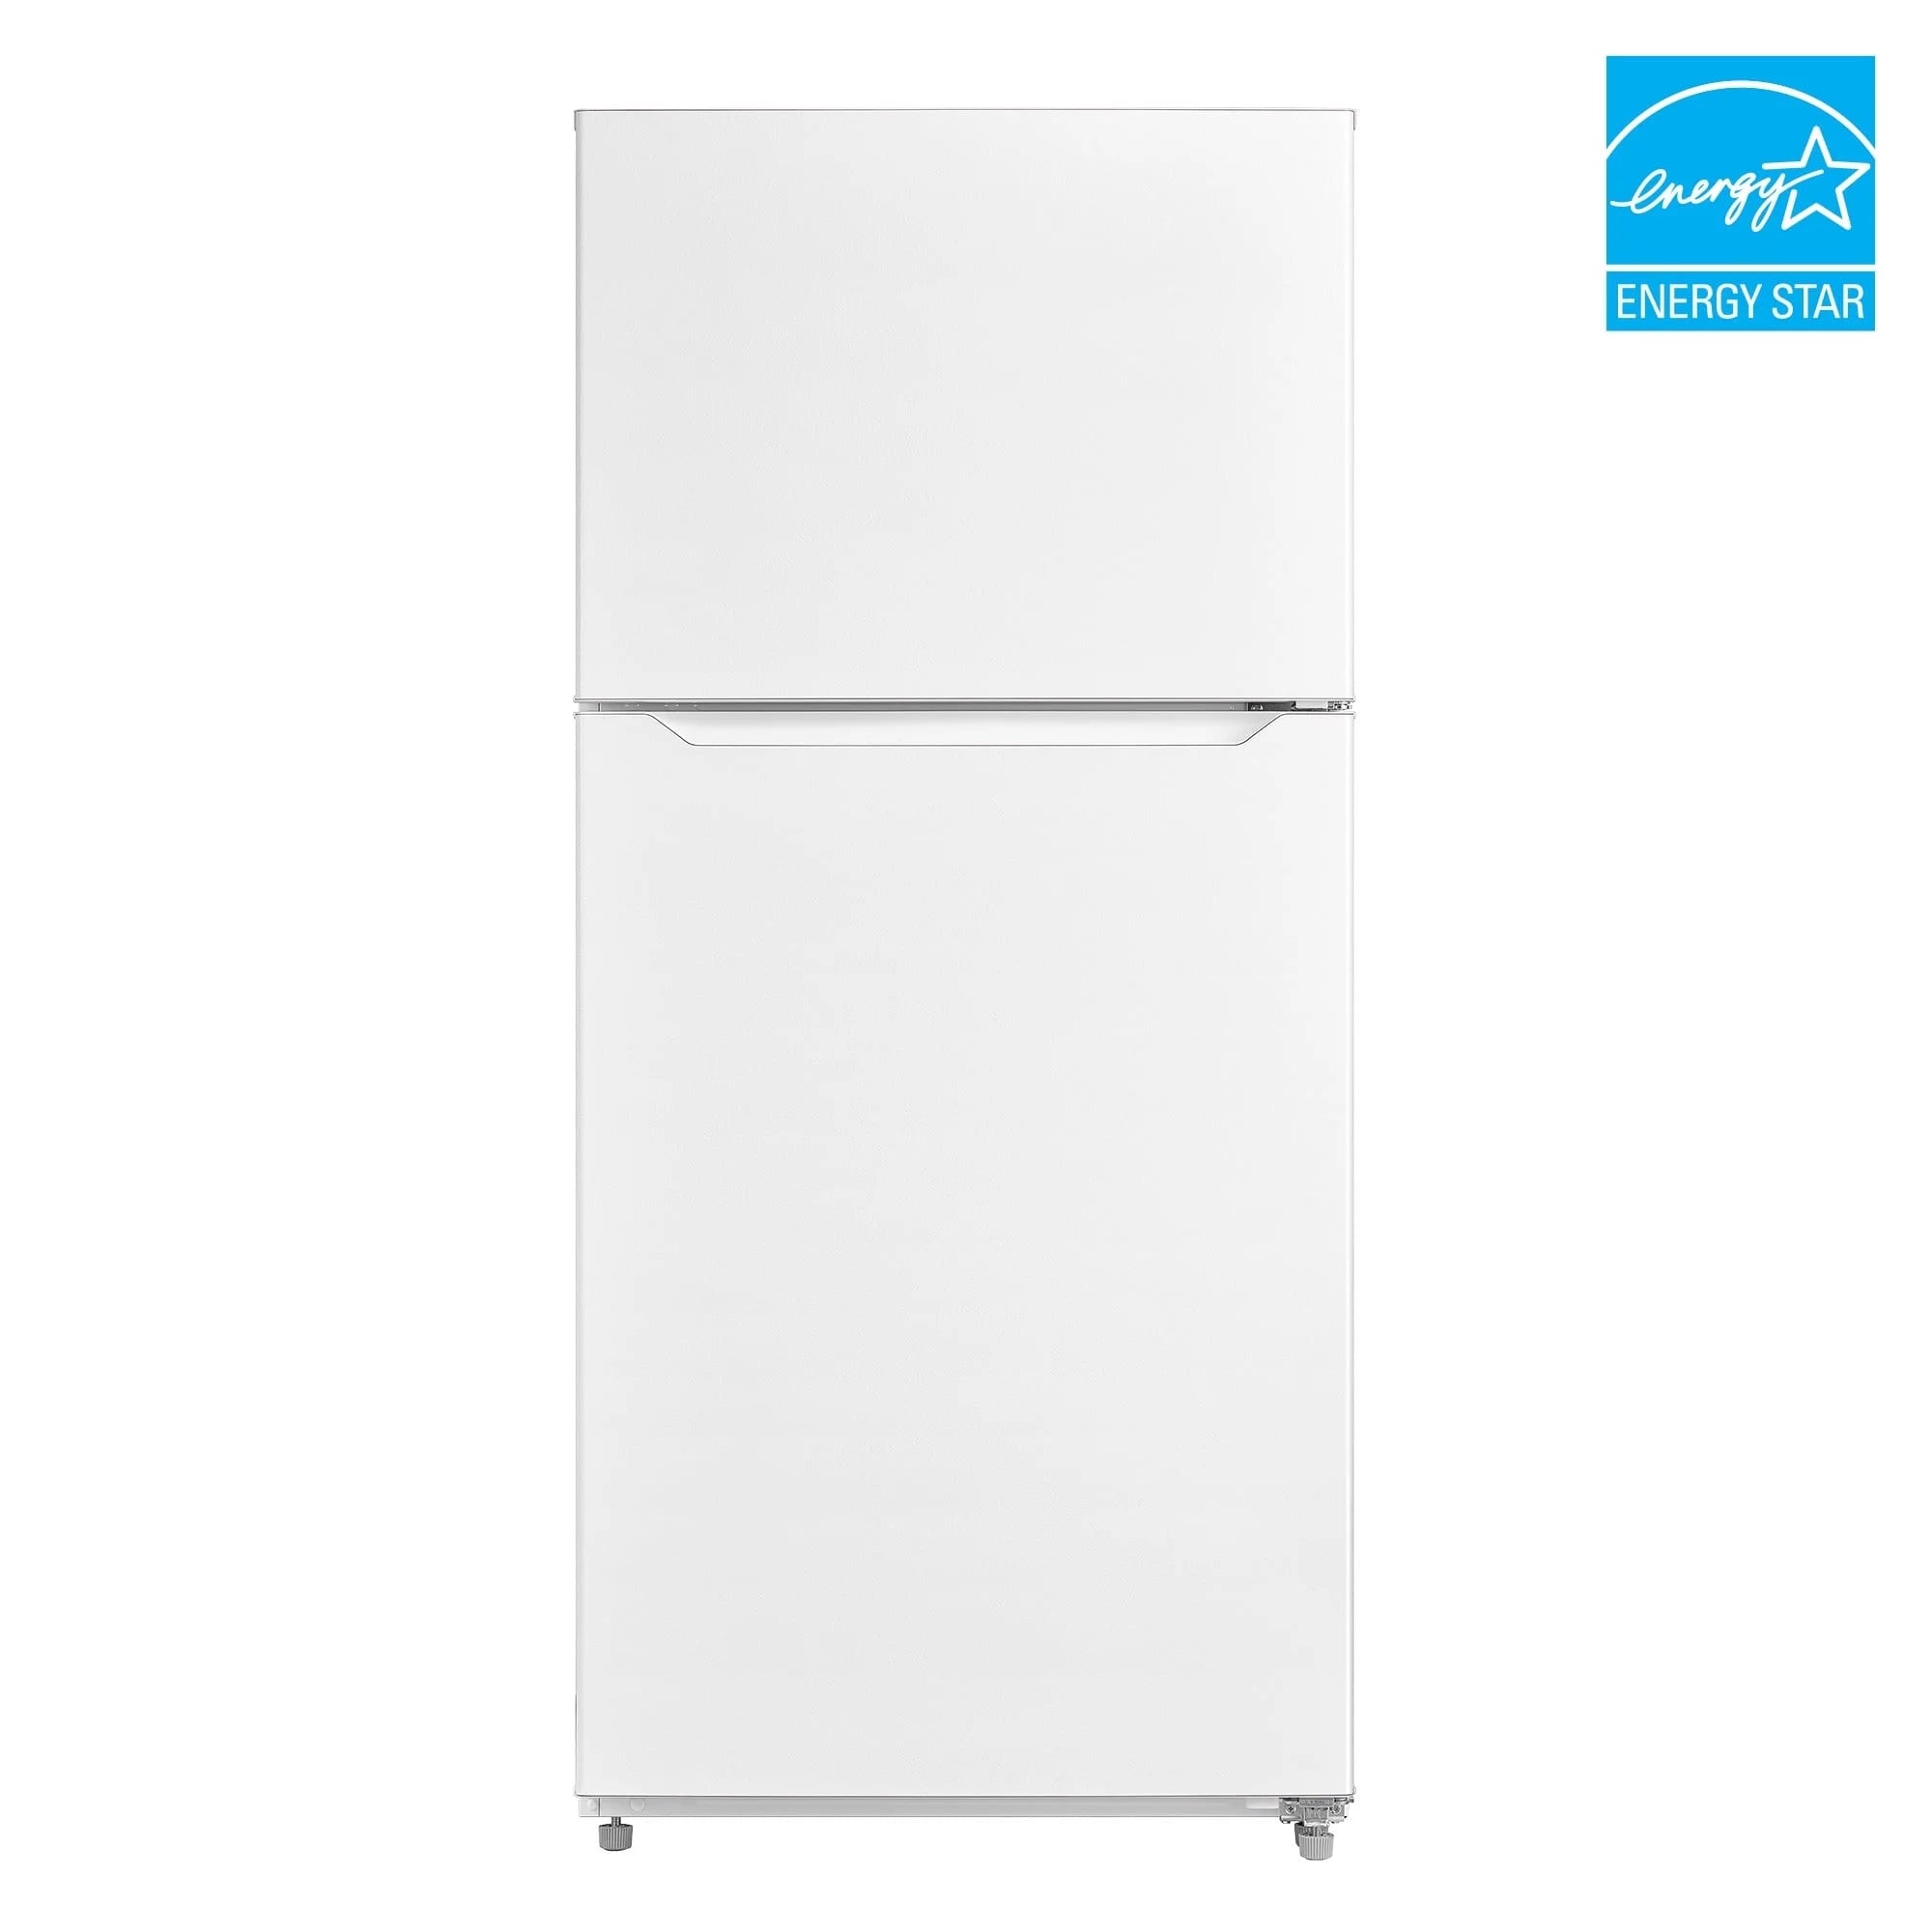 14.2 Cu. Ft. Top Freezer Refrigerator - White, ENERGY STAR (ERT14CSCW)